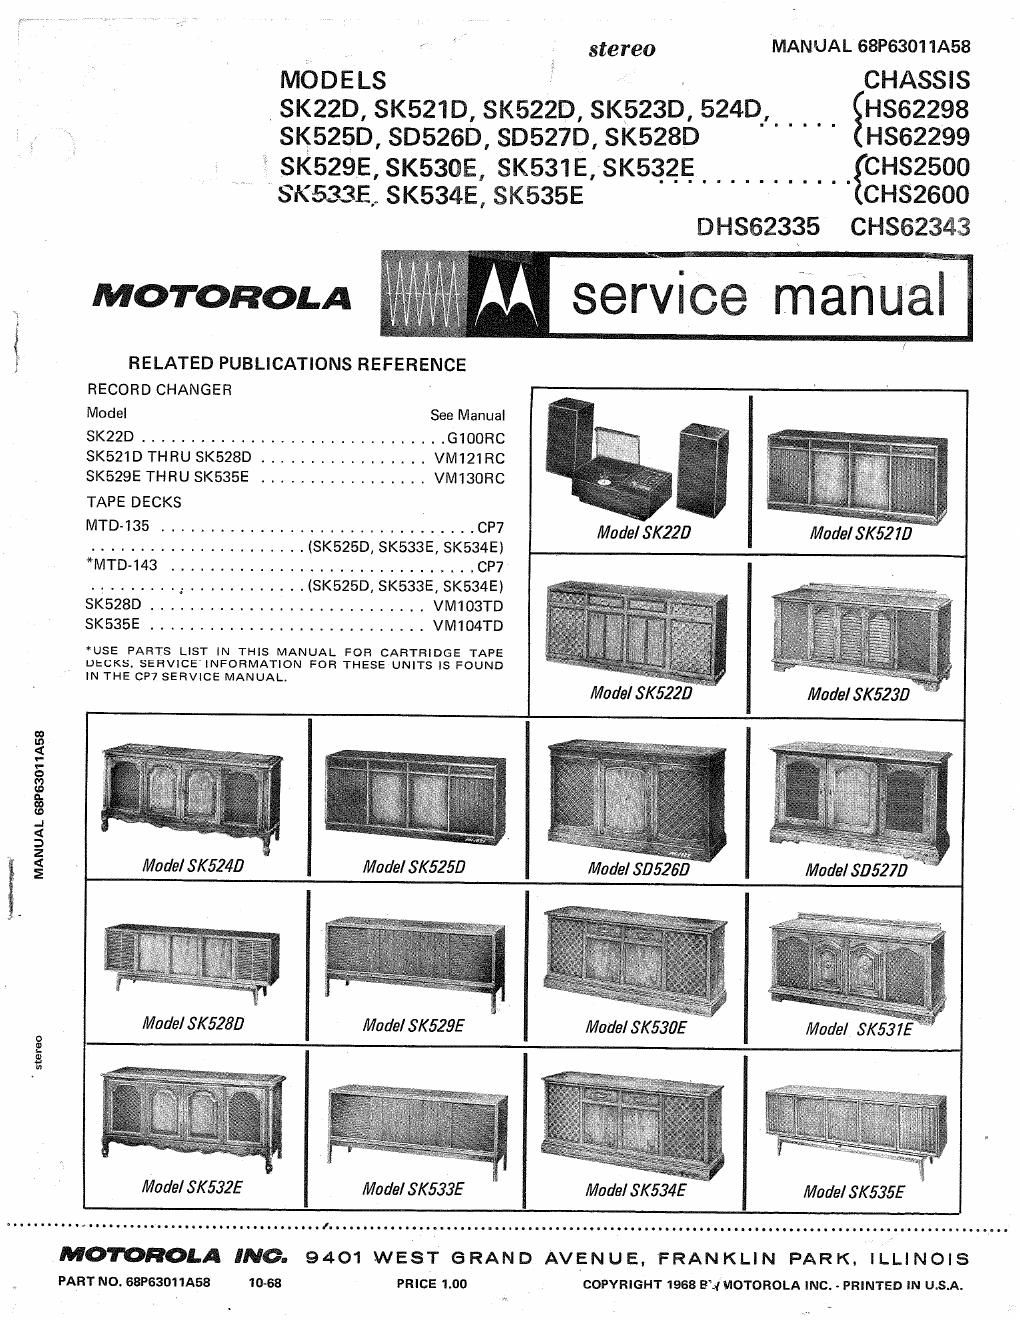 motorola sk 521 d service manual